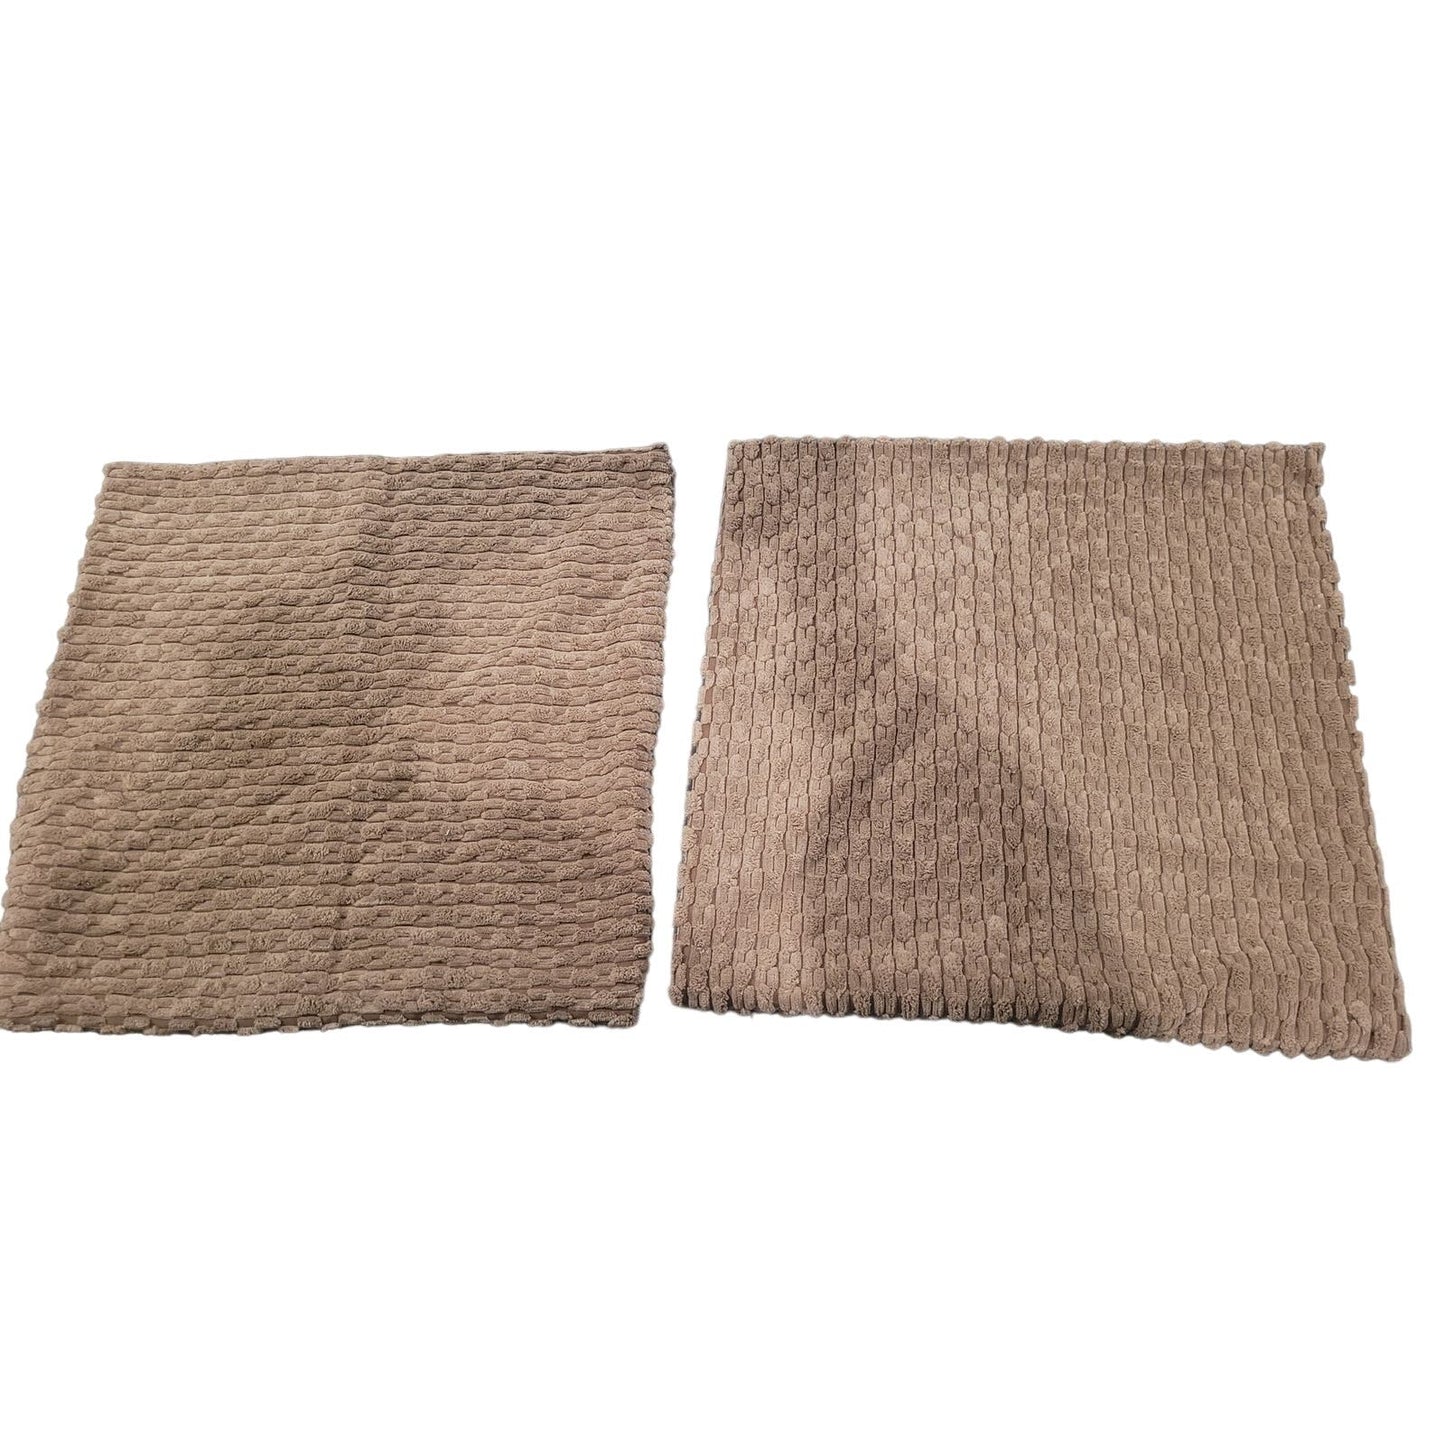 MIULEE Brown/Tan Corduroy Pillow Covers 18x18 Inch Set of 2, Super Soft BOHO